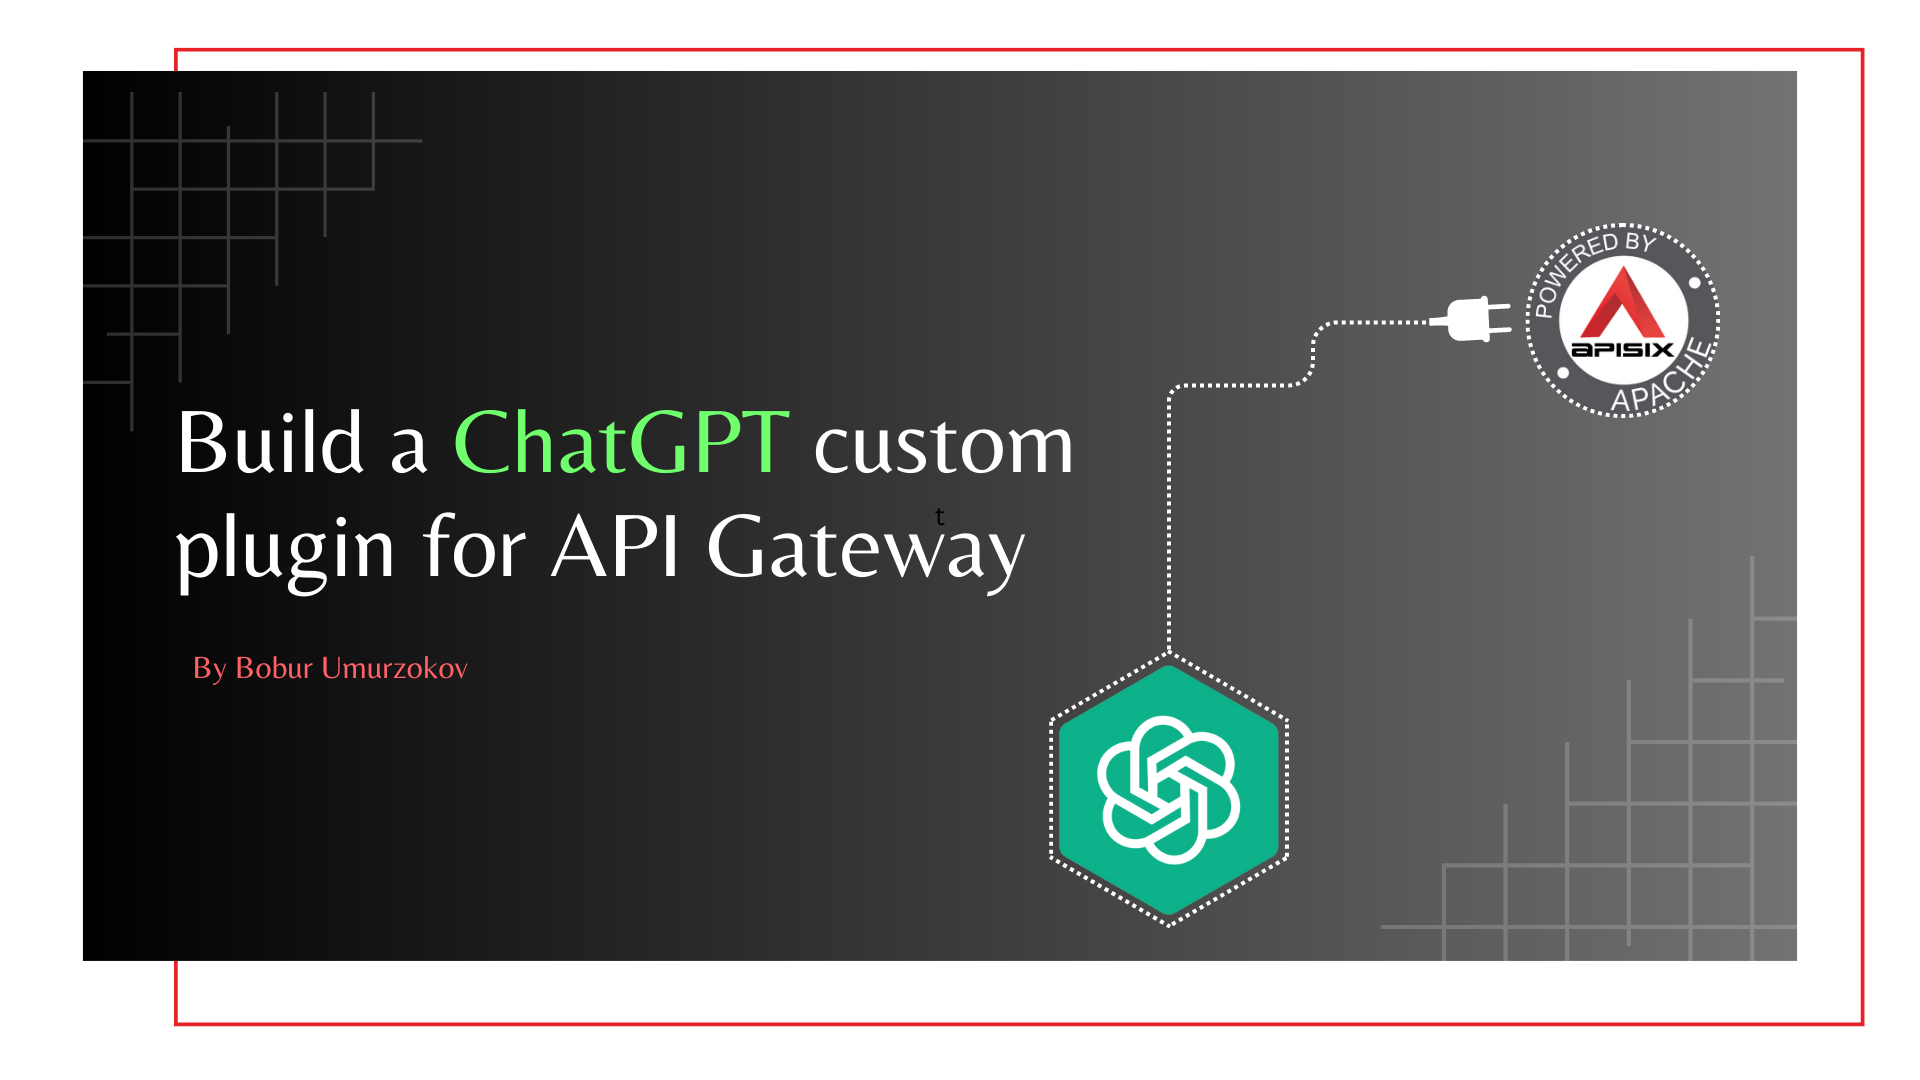 Building a ChatGPT Custom Plugin for API Gateway